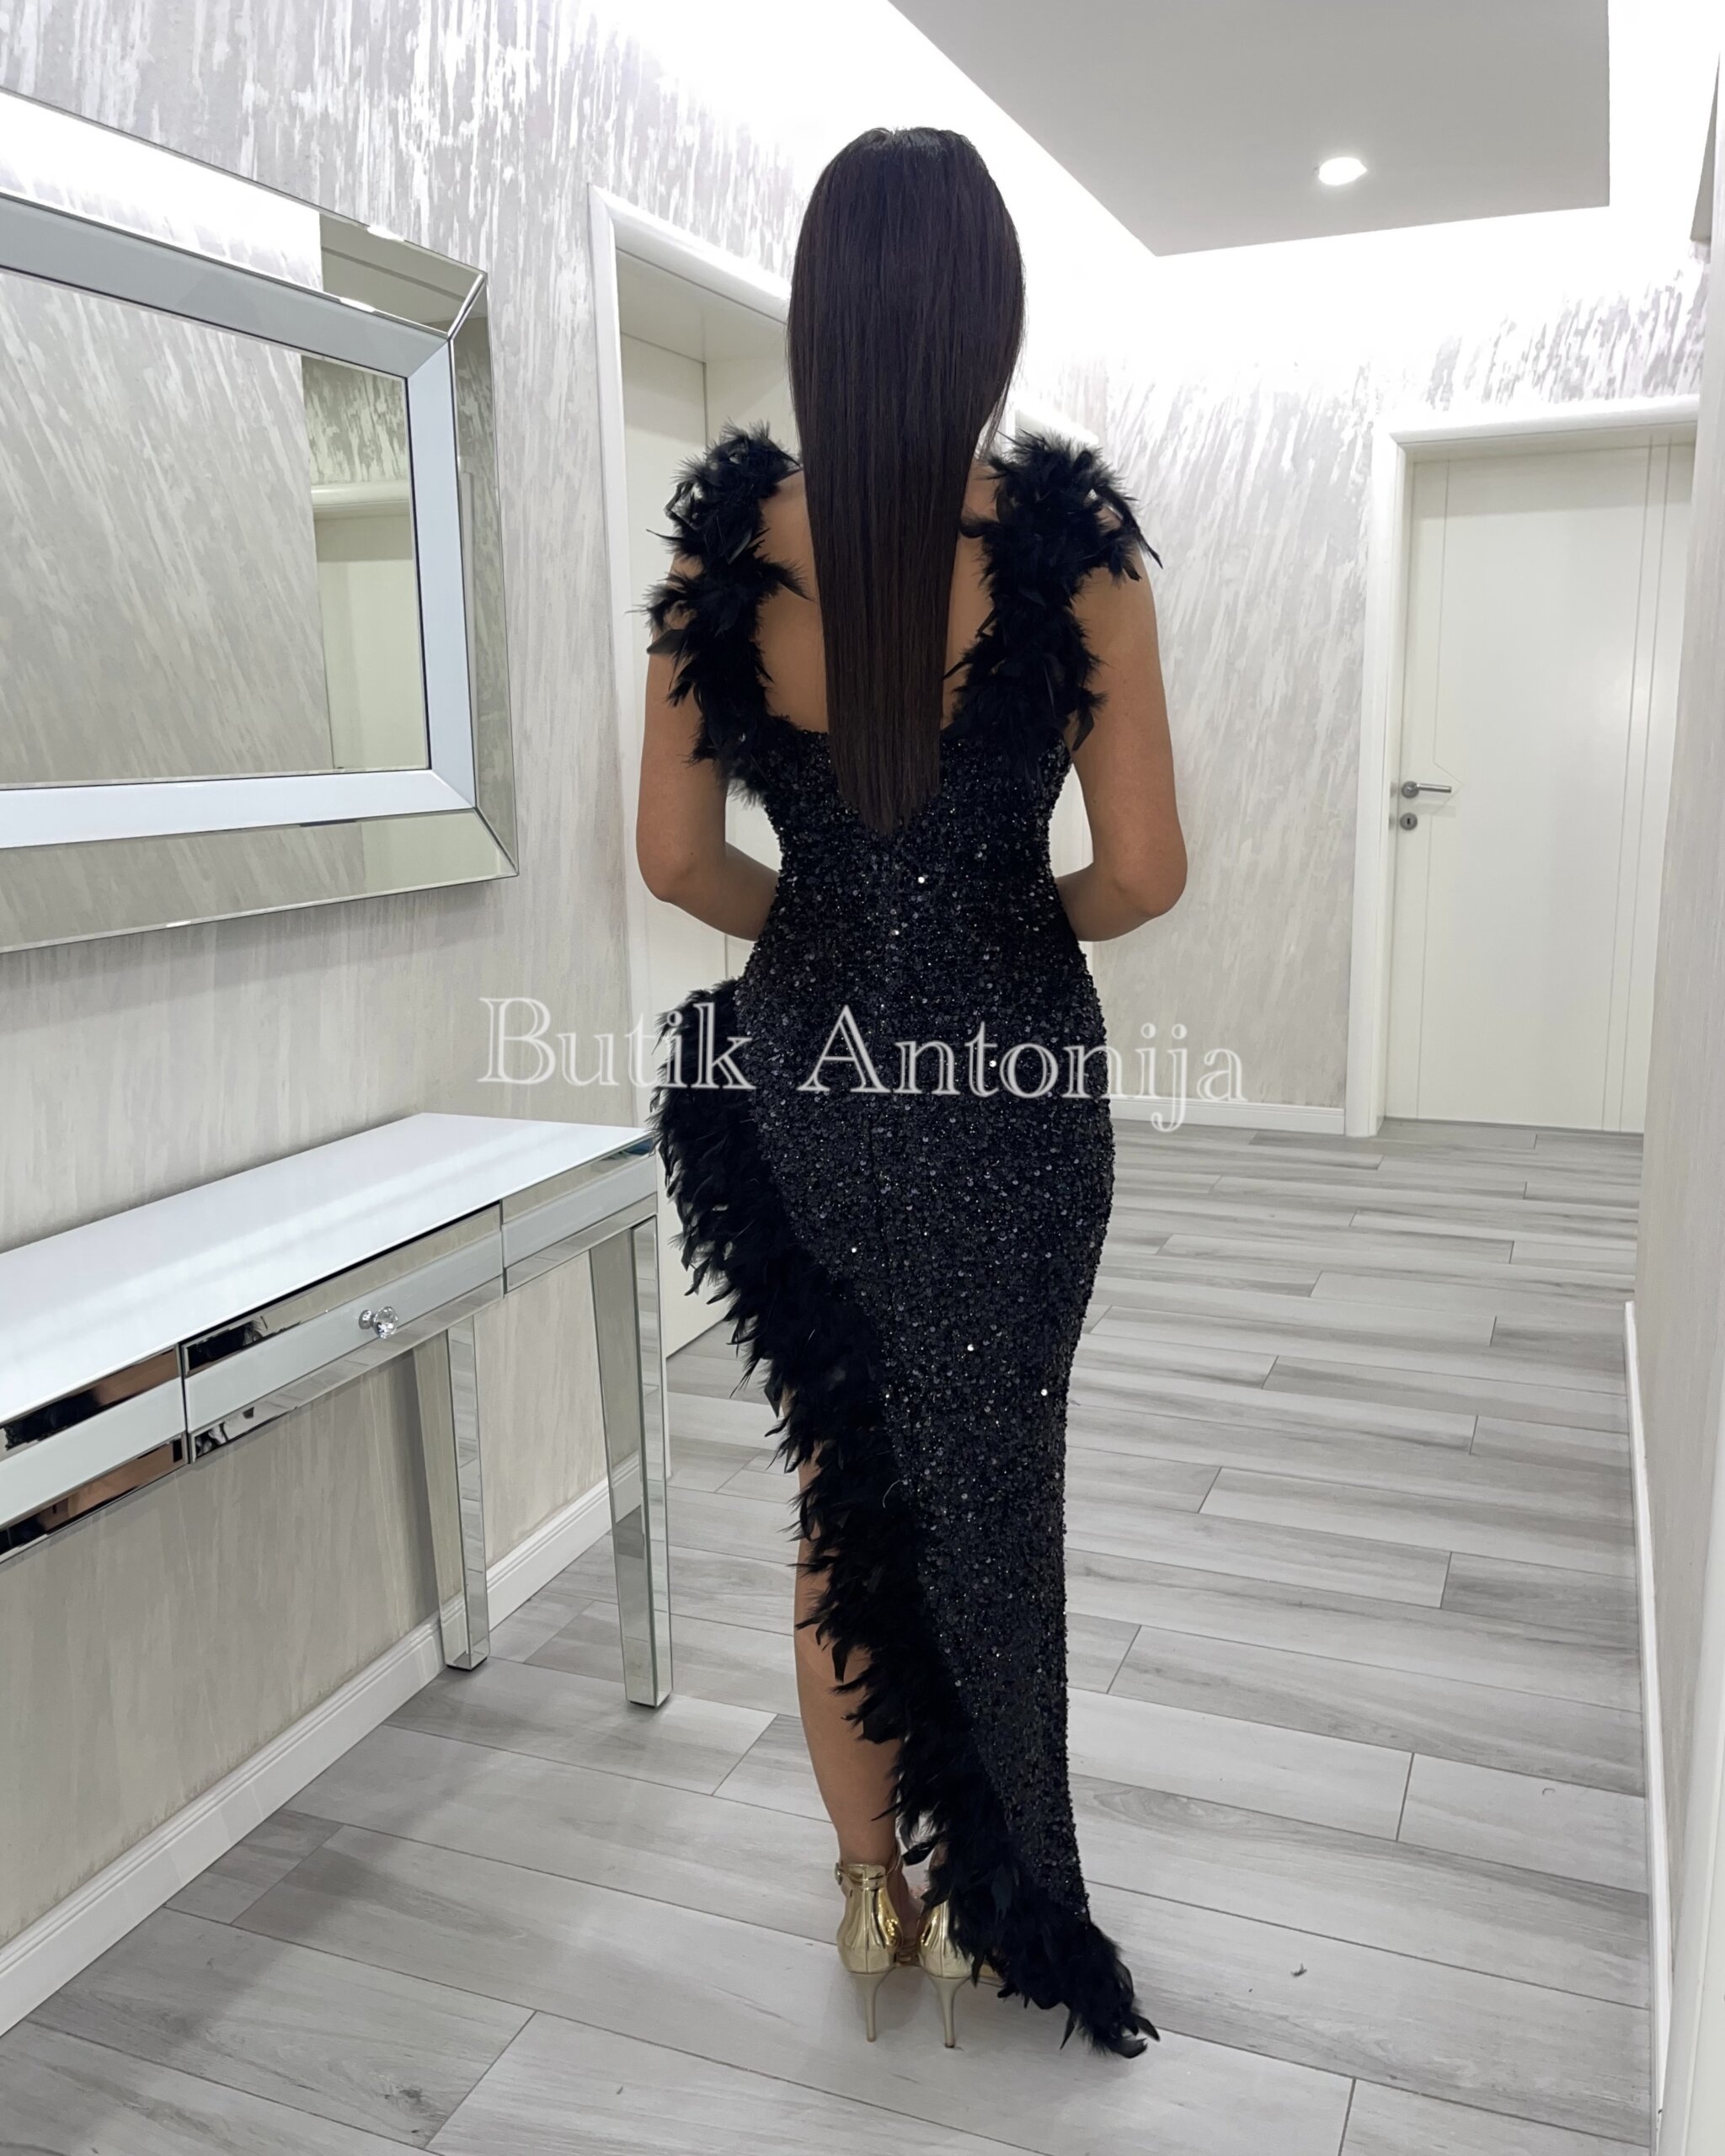 Asimetrična šljokasta haljina s perjem | Butik Antonija webshop